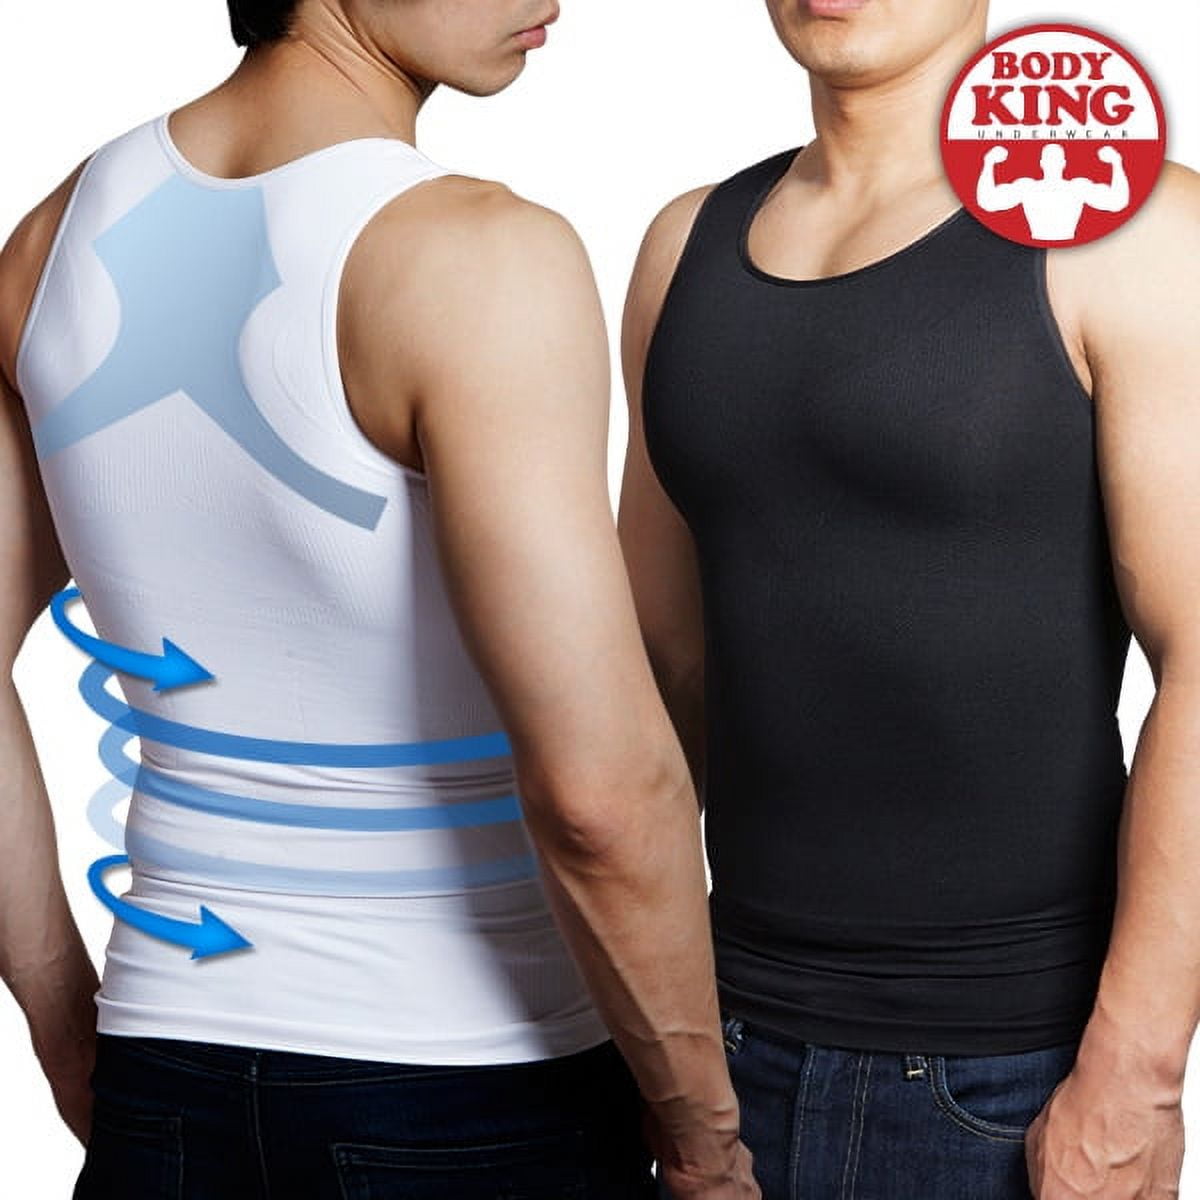 Body King] Slim Vest, Shapewear, Men's Chest Compression Slimming